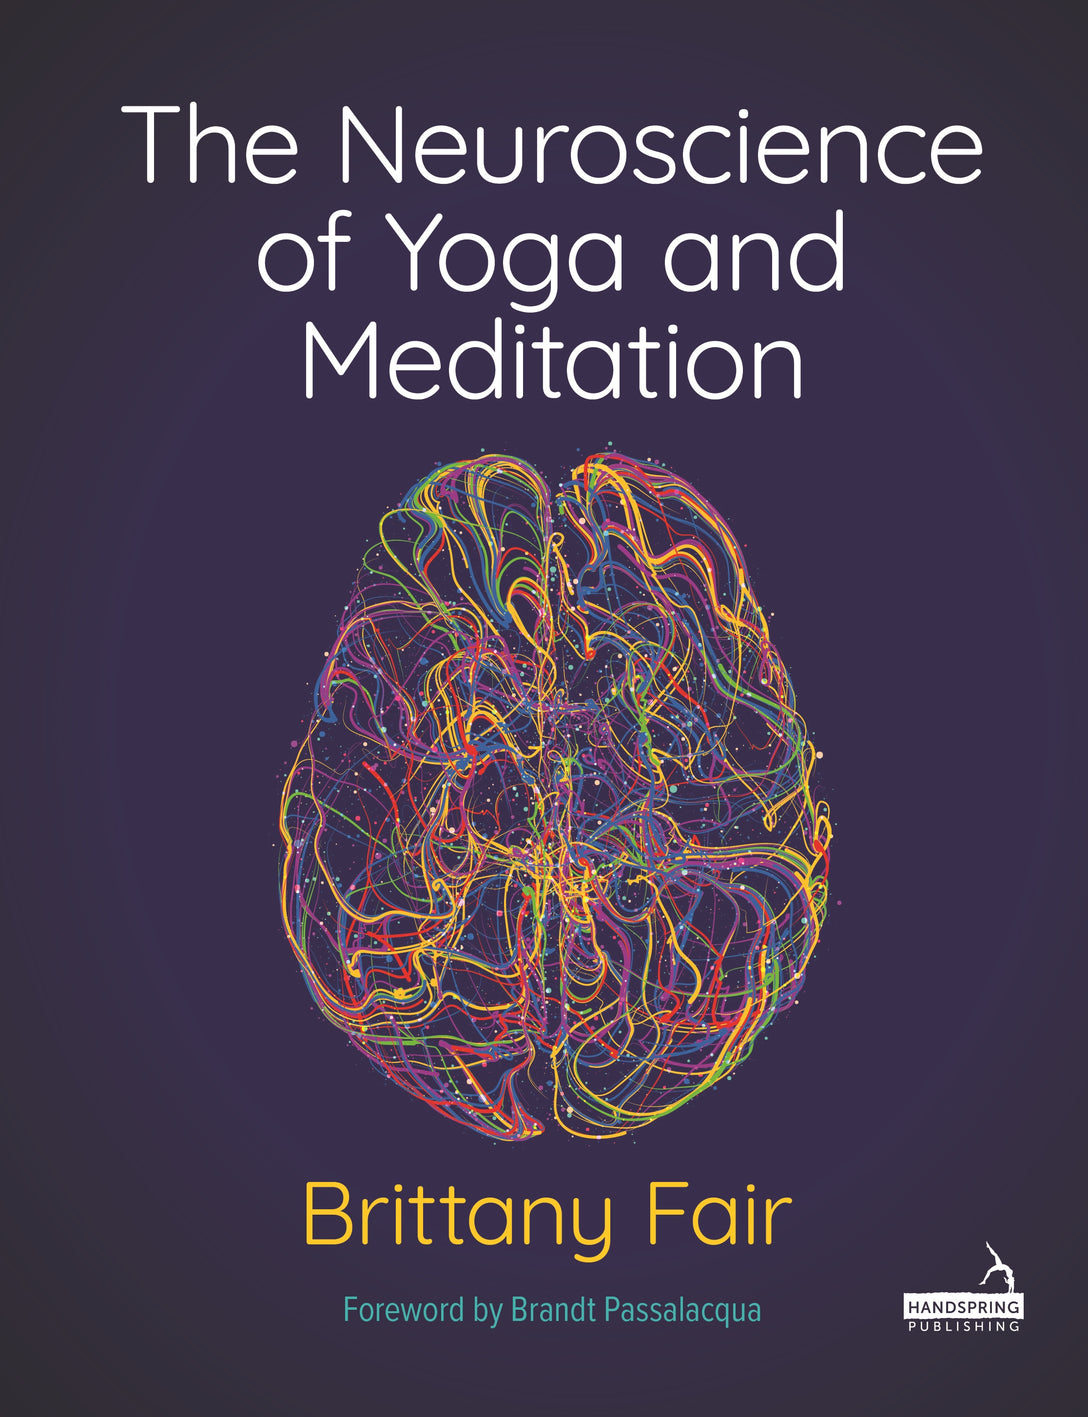 The Neuroscience of Yoga and Meditation by Bruce Hogarth, Brittany Fair